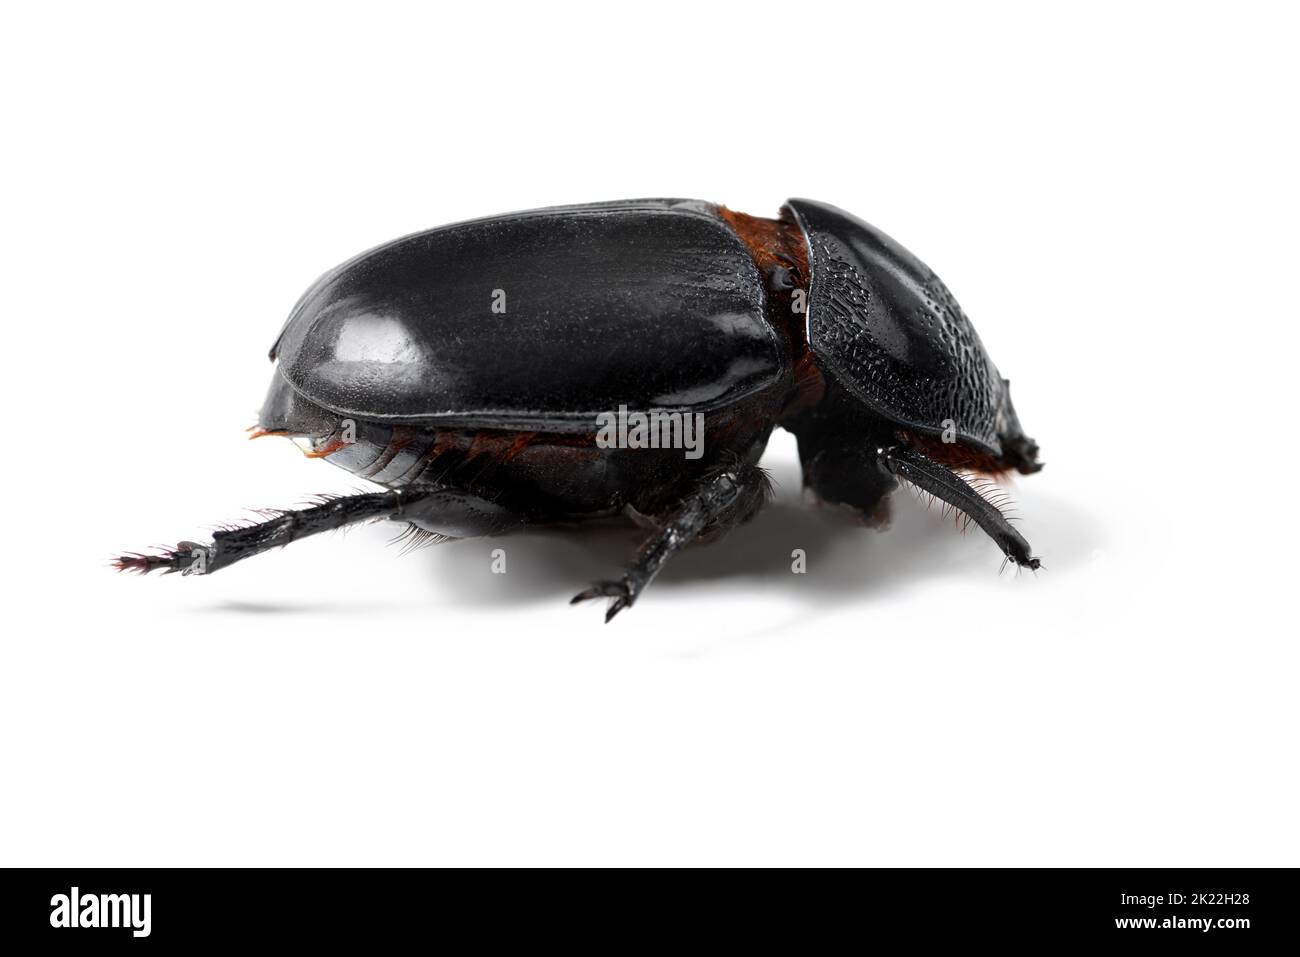 The black beauty of the bug world. Closeup studio shot of a beetle. Stock Photo